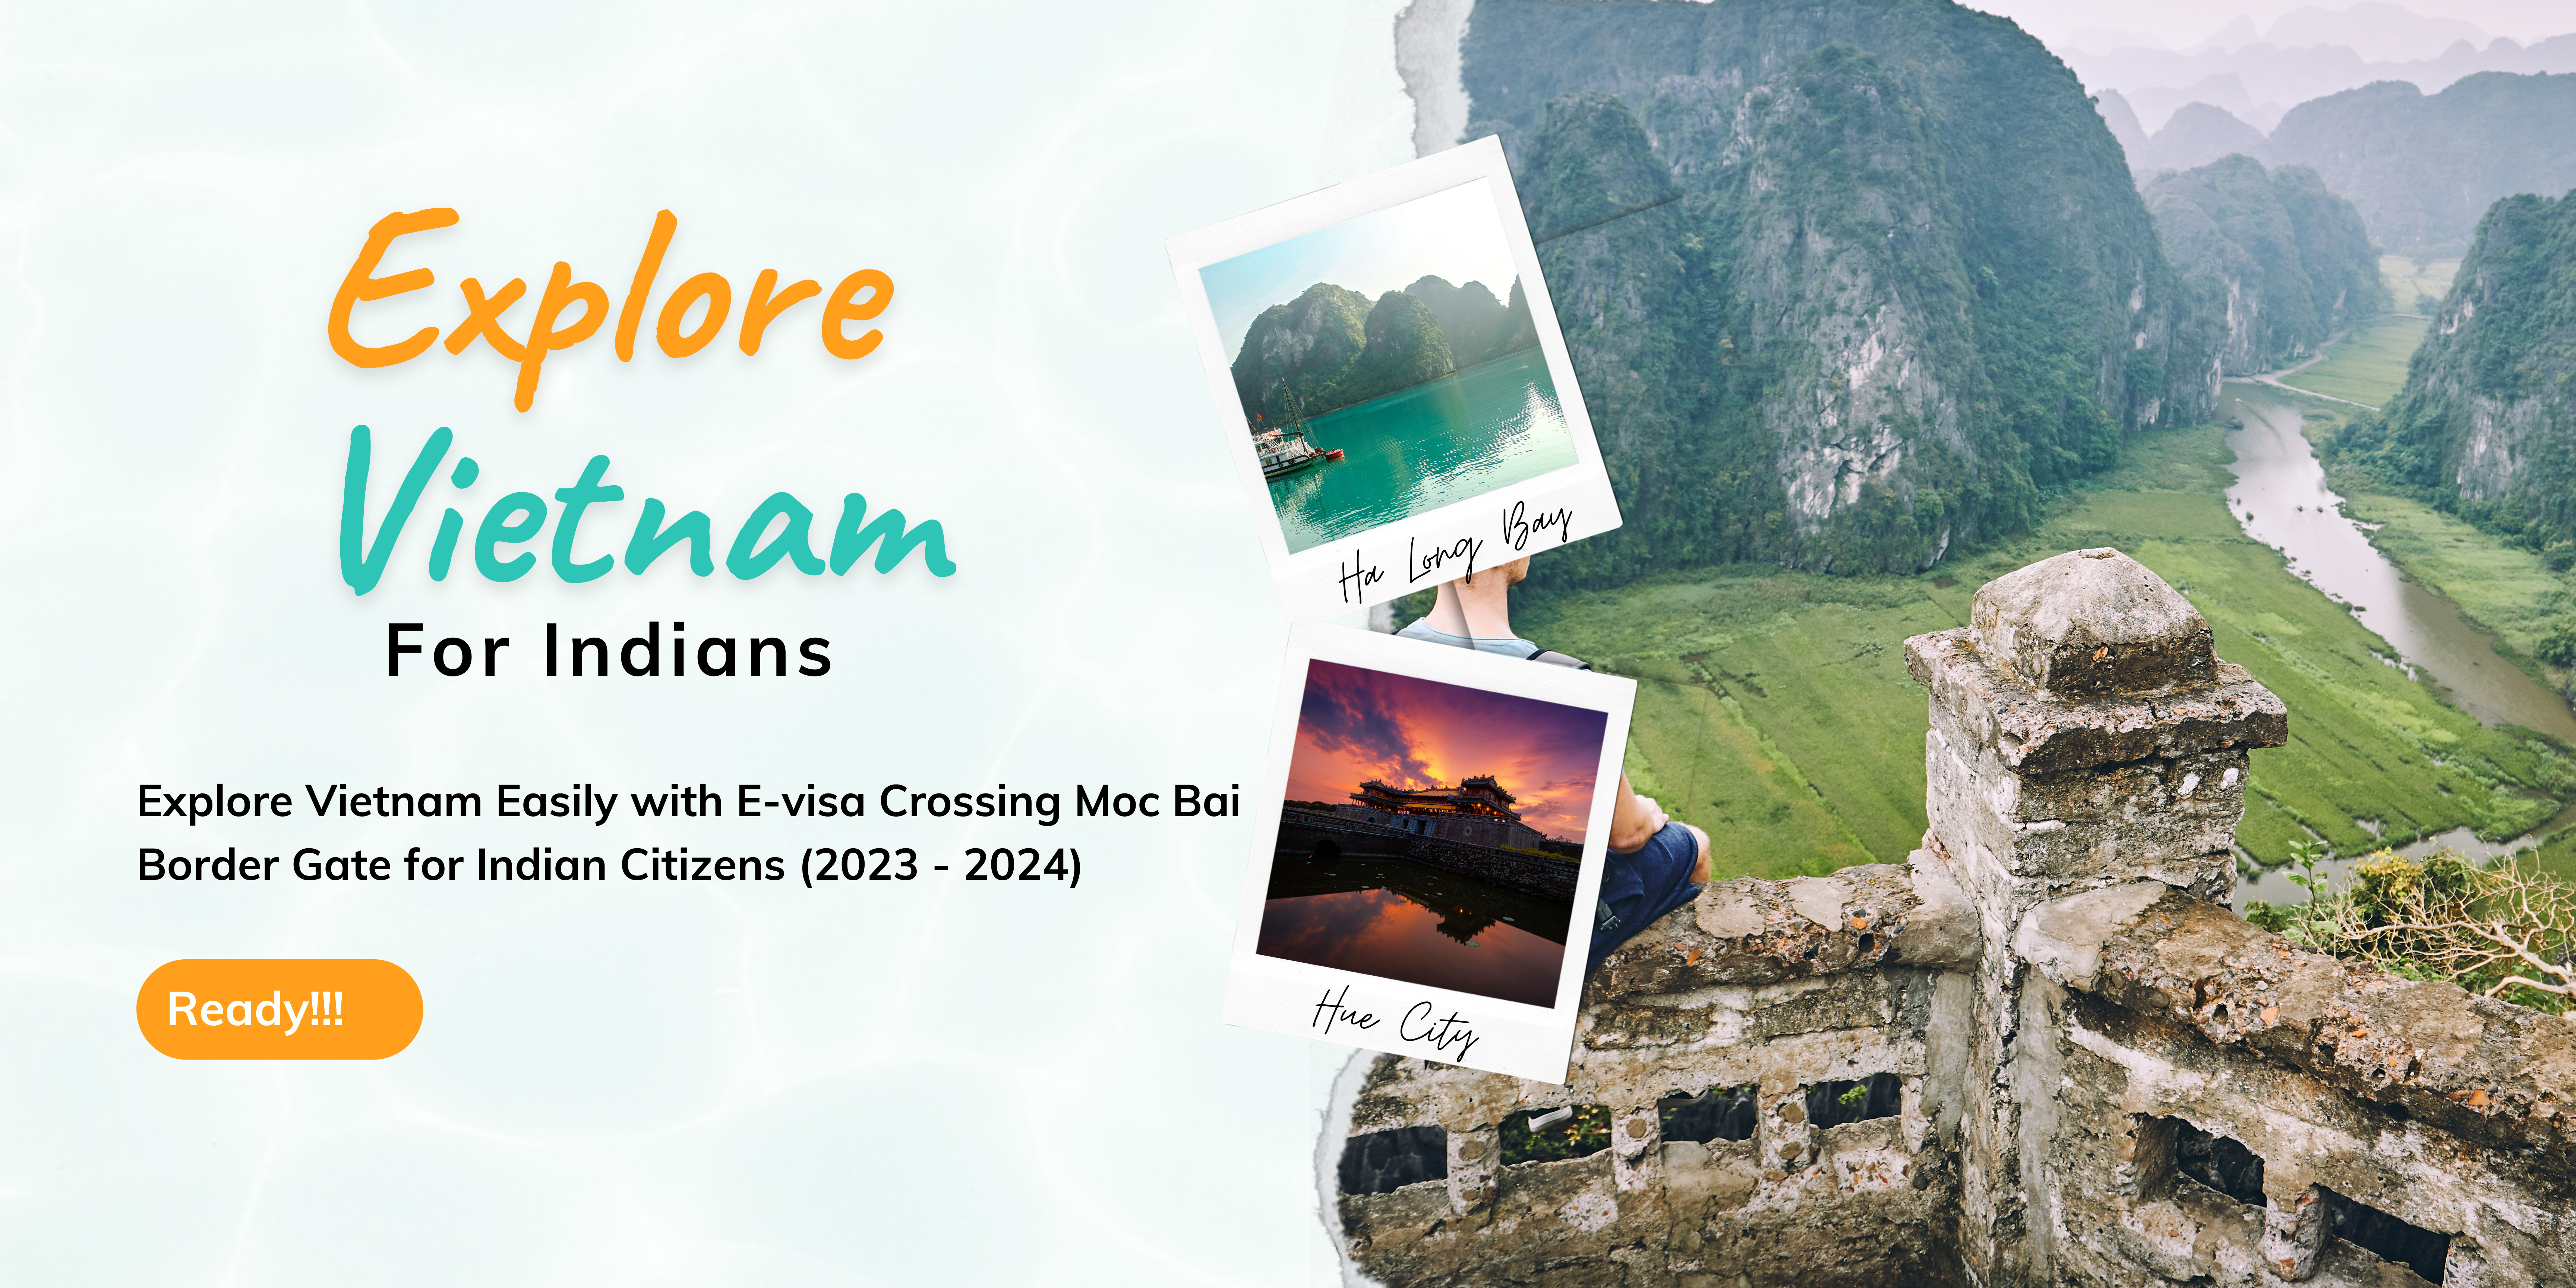 Explore-Vietnam-Easily-with-E-visa-crossing-Moc-Bai-Border-Gate-for-Indian-Citizens-2023-2024